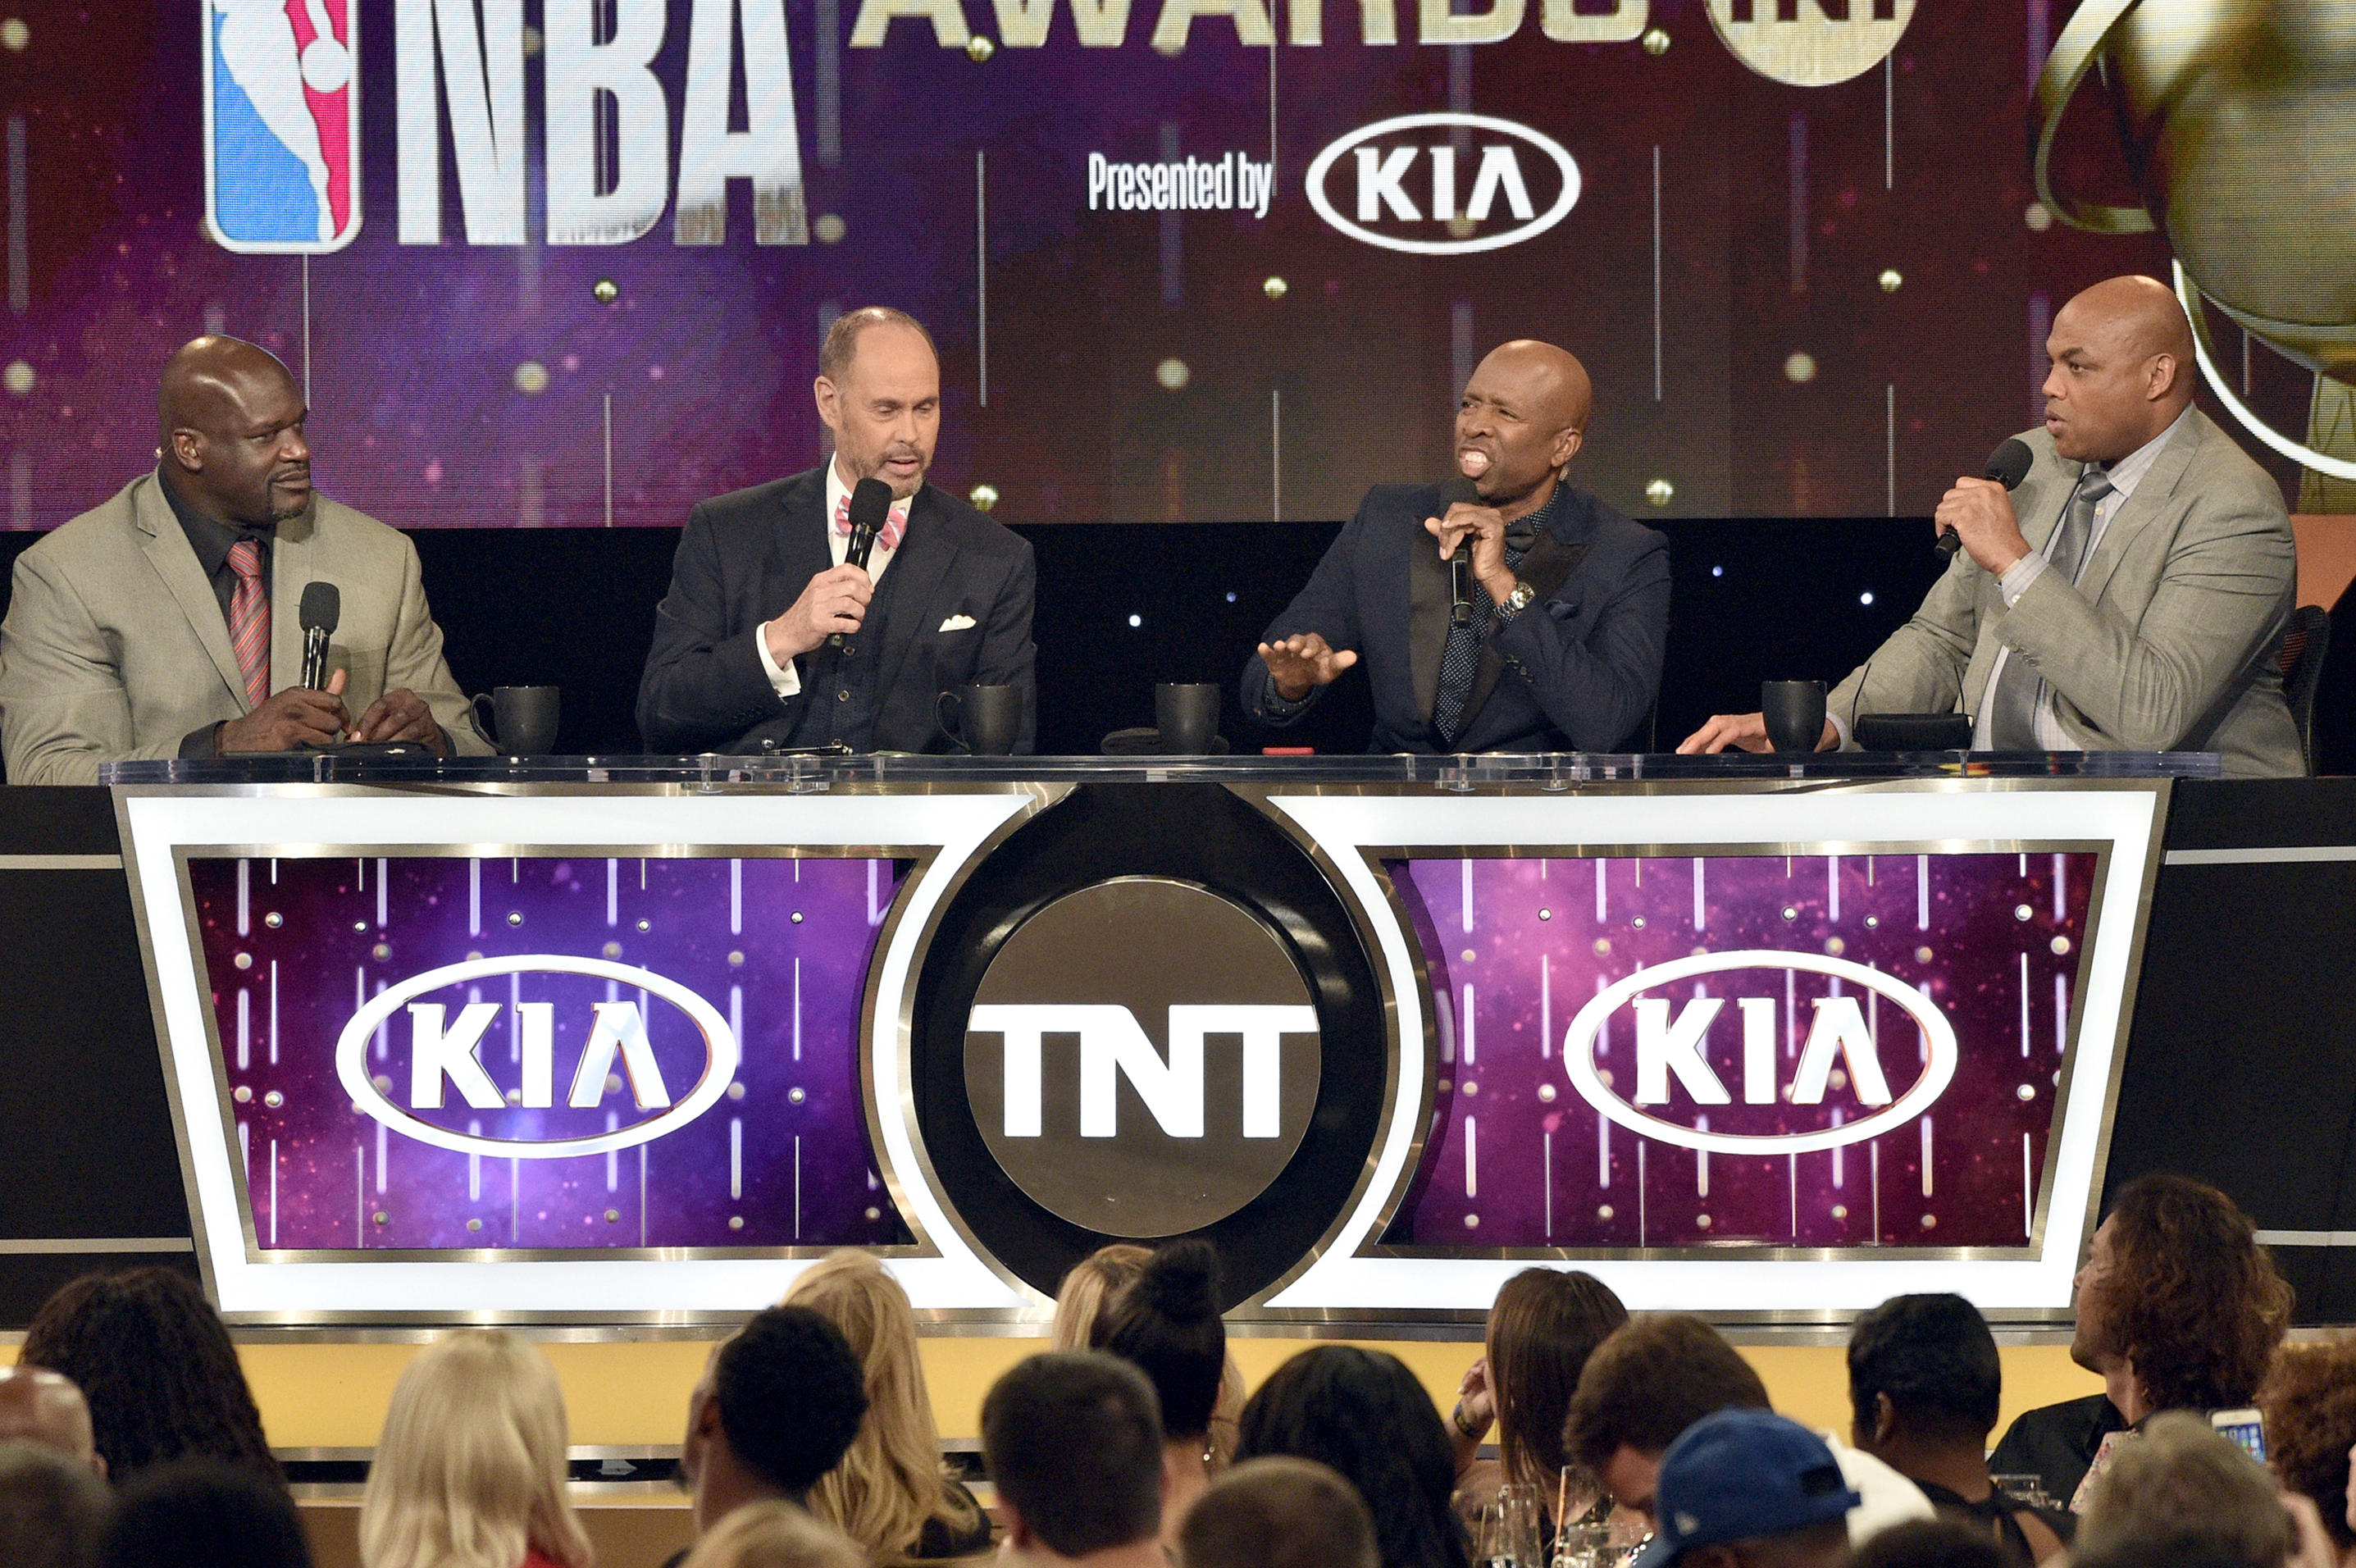 NBA's return: Eight things to watch